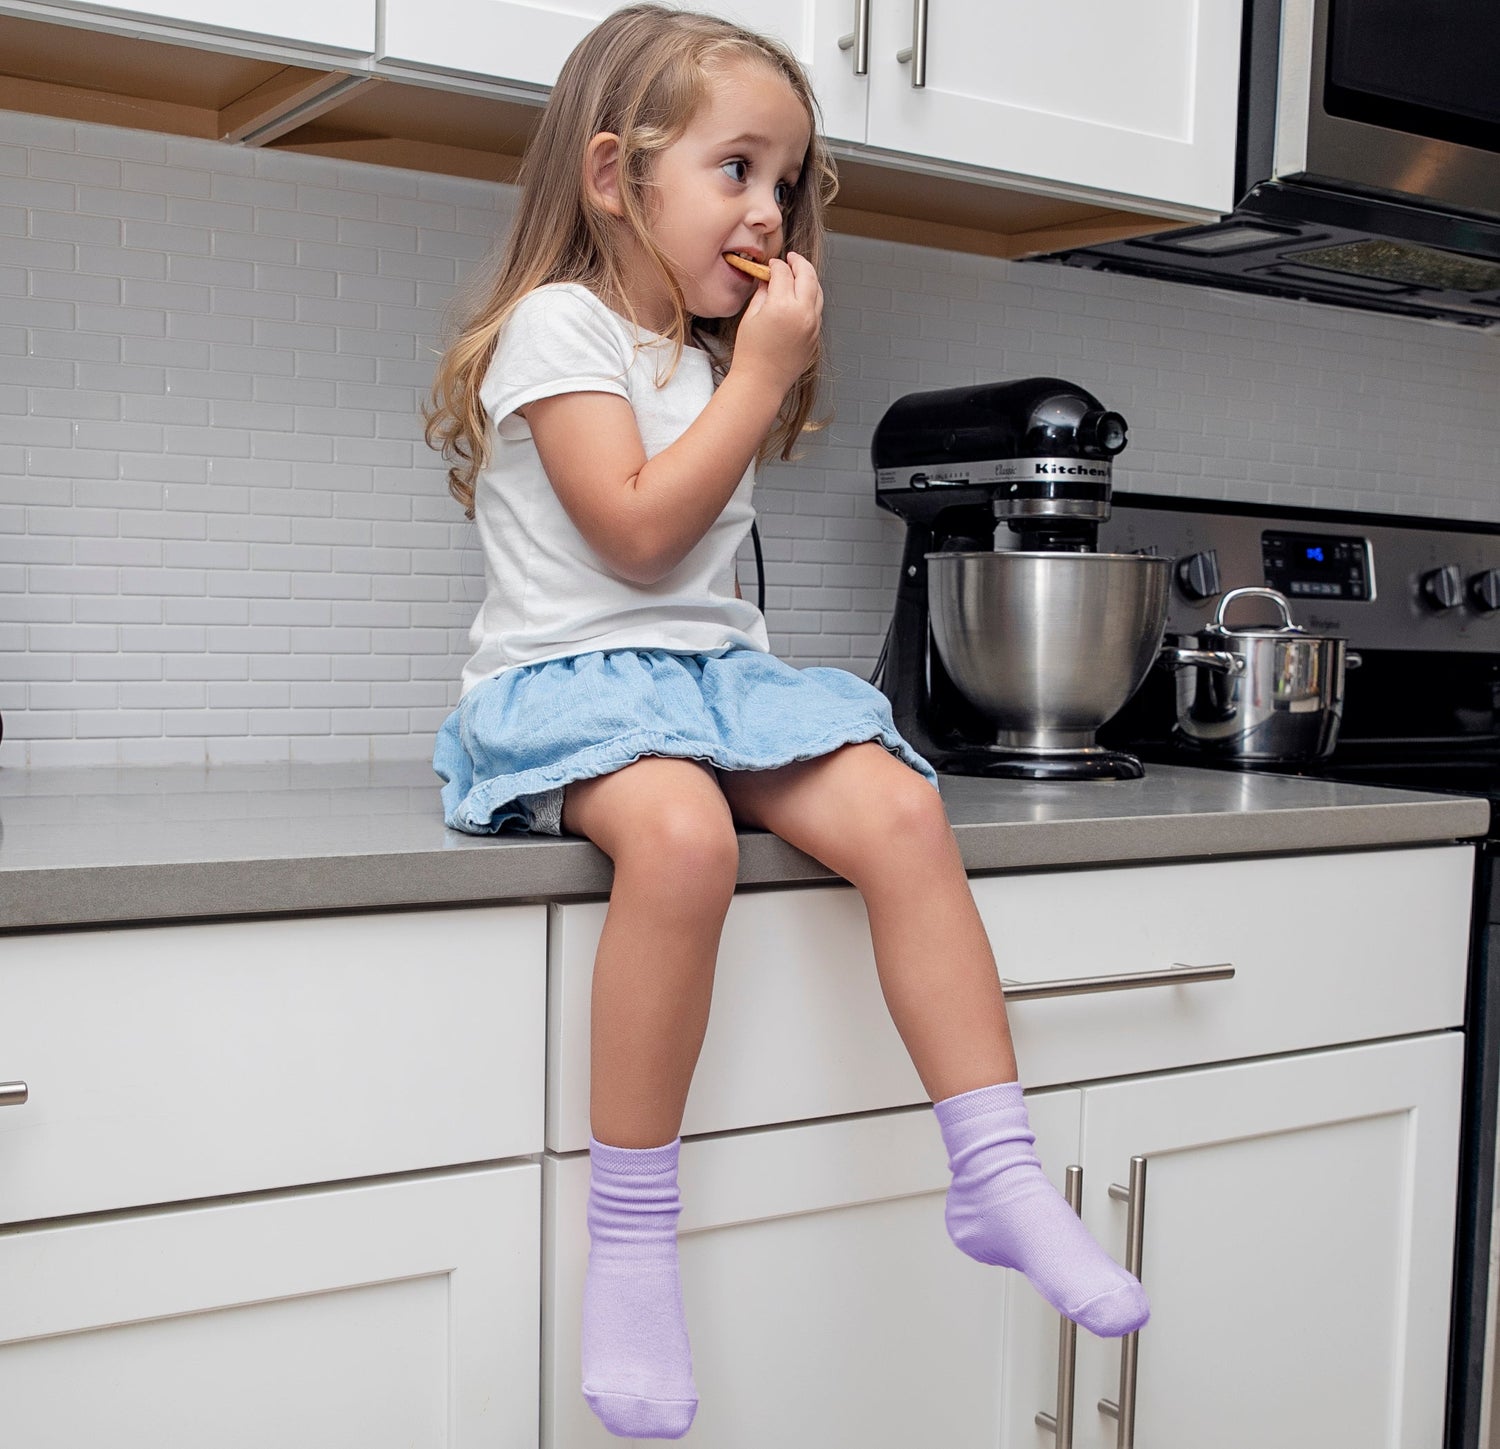 Child sitting on counter wearing light purple anti slip socks with tread pattern.